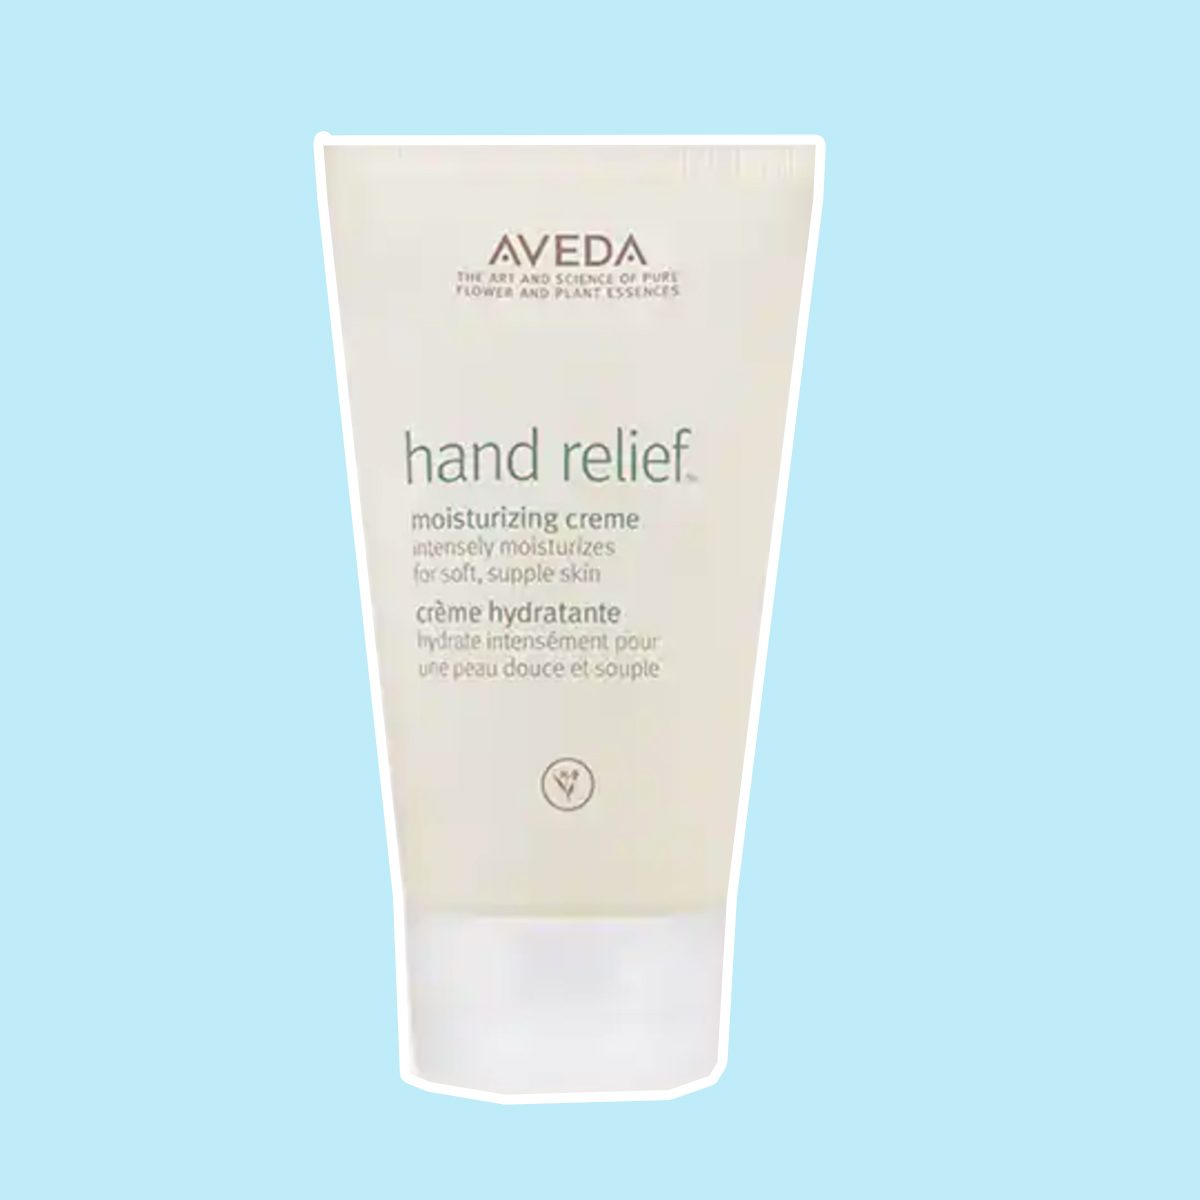 hand relief™ moisturizing creme